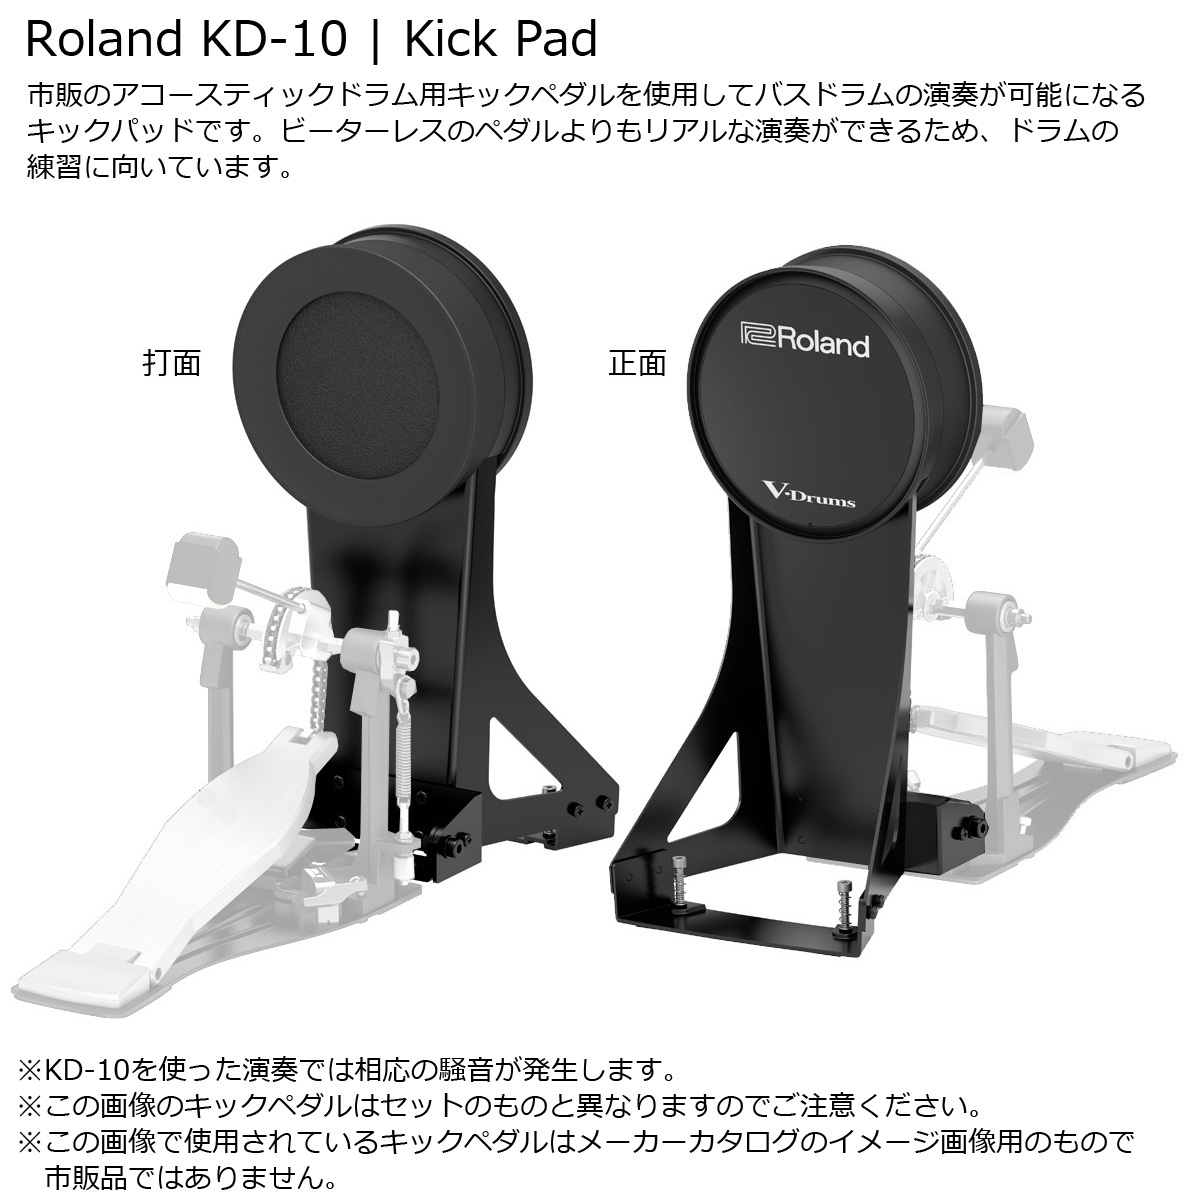 Roland KD-10 キックパッド ①-